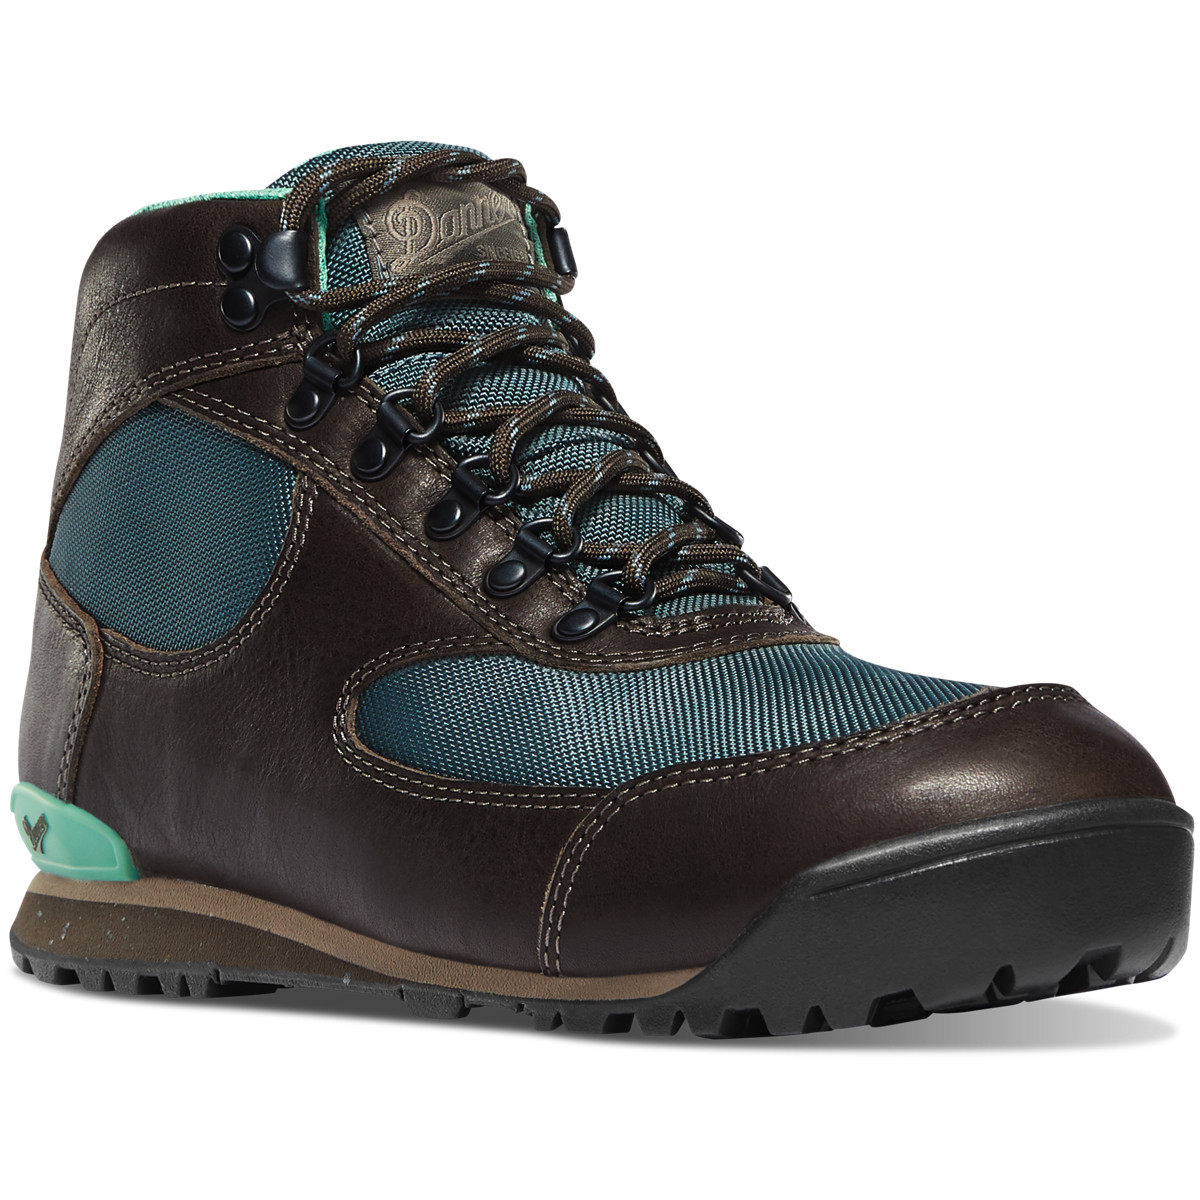 Danner Womens Jag Hiking Boots Dark Brown/Blue - BUC370148